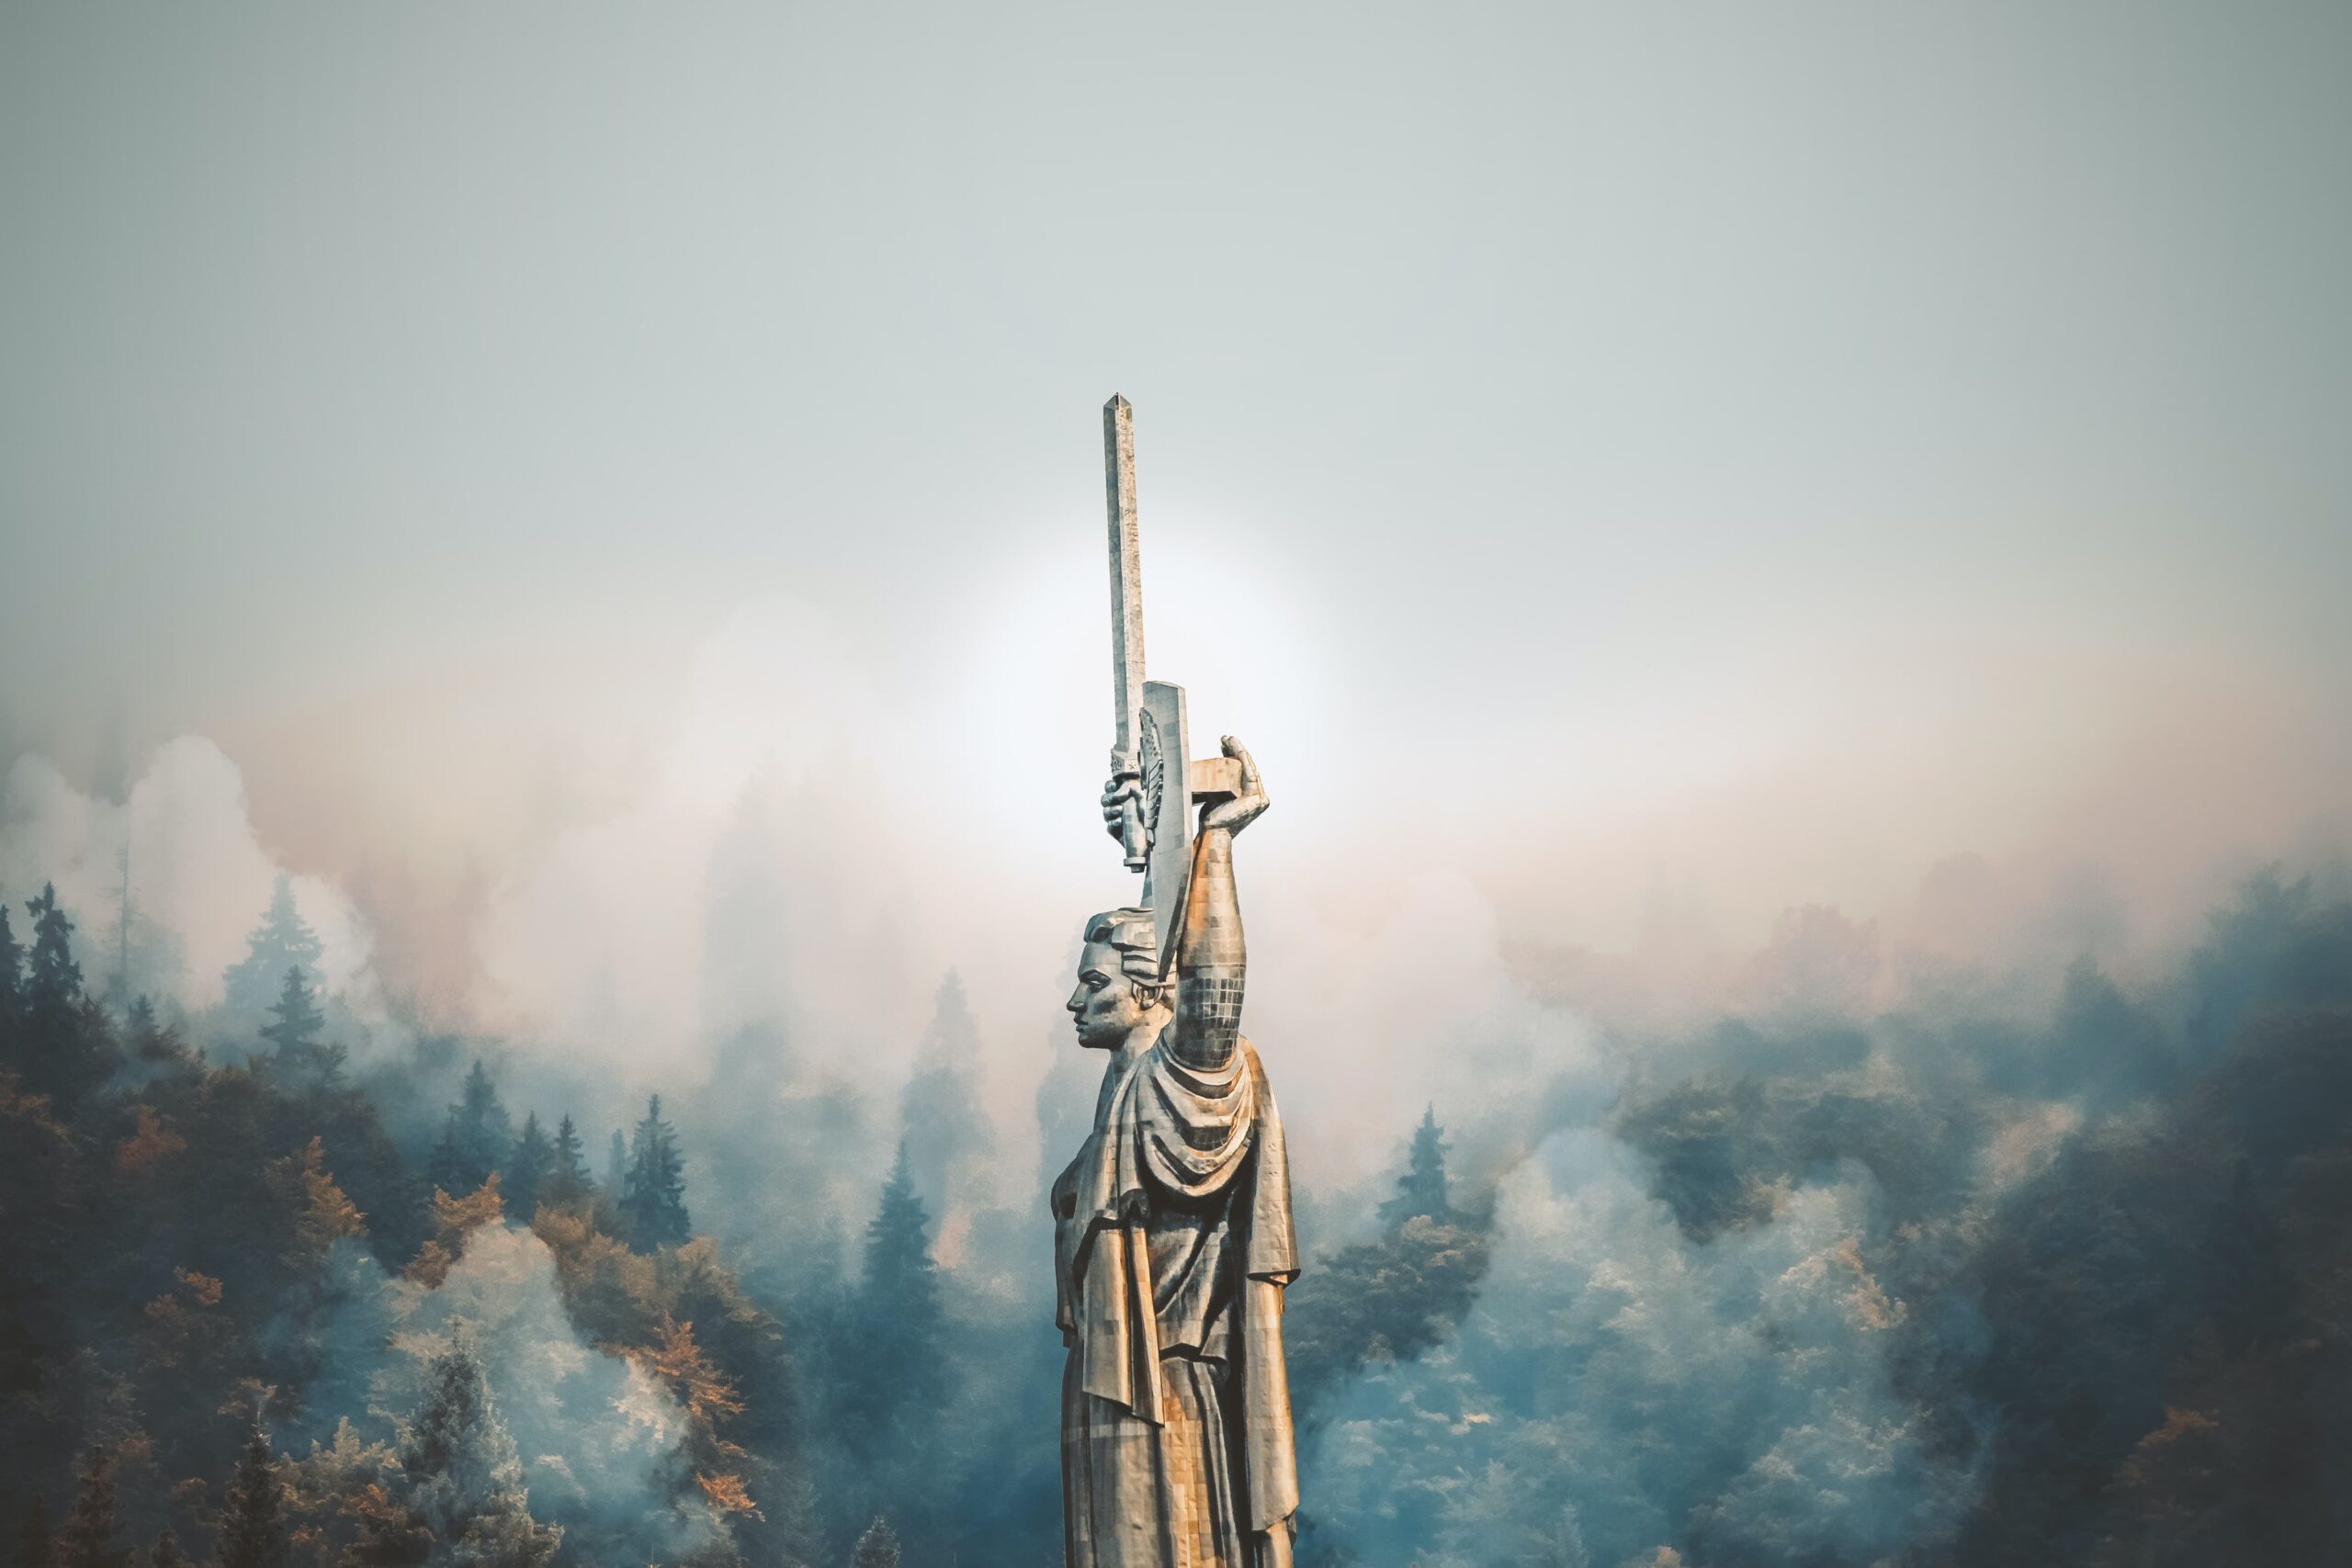 Monument in Ukraine - Motherland